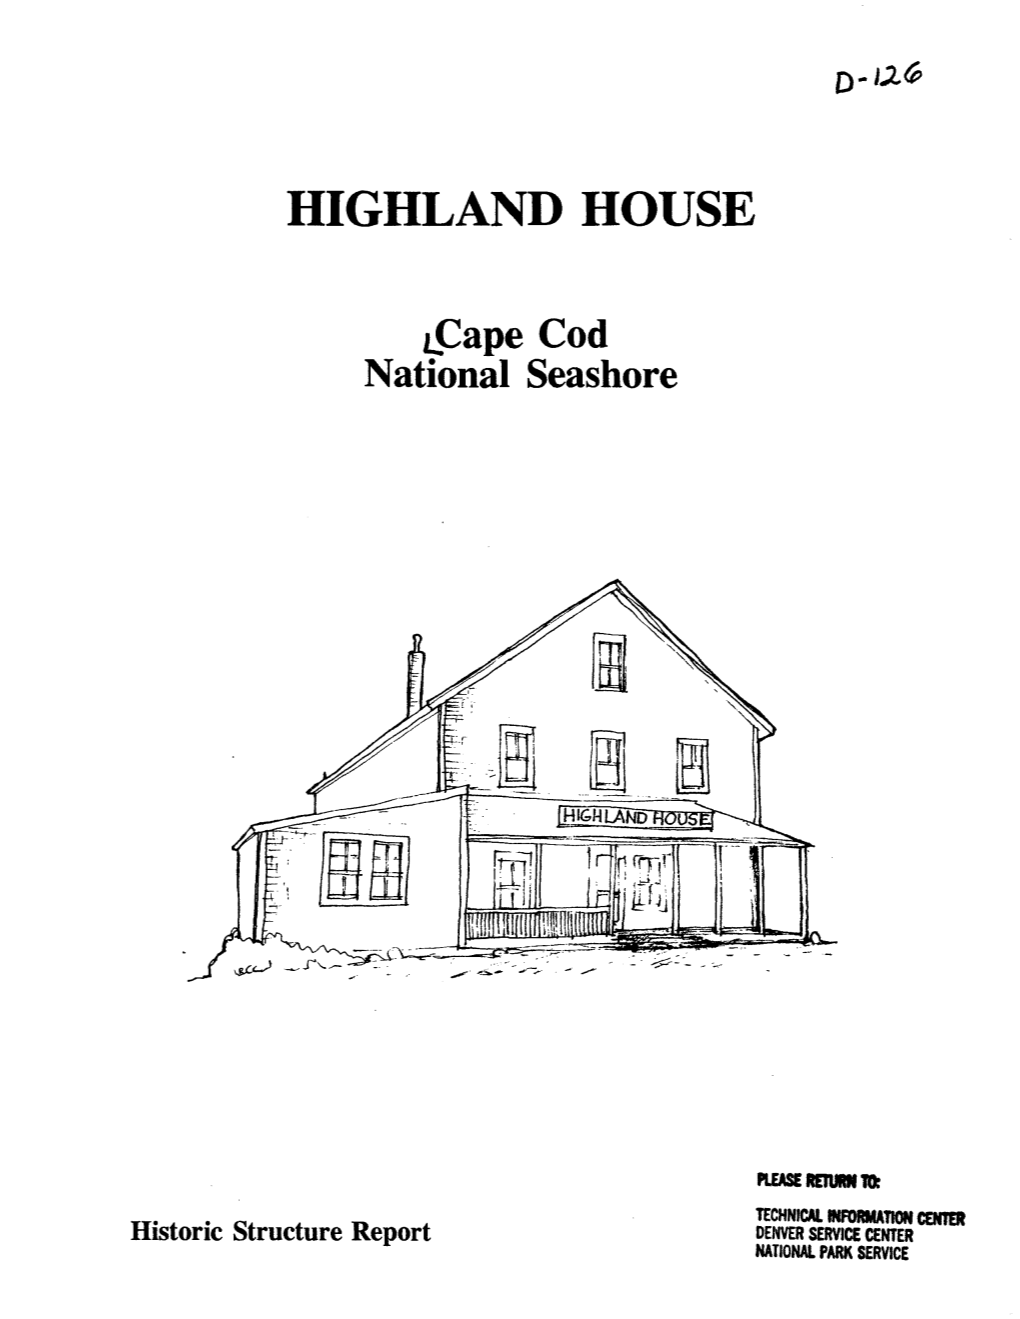 Highland House, Cape Cod National Seashore, North Truro